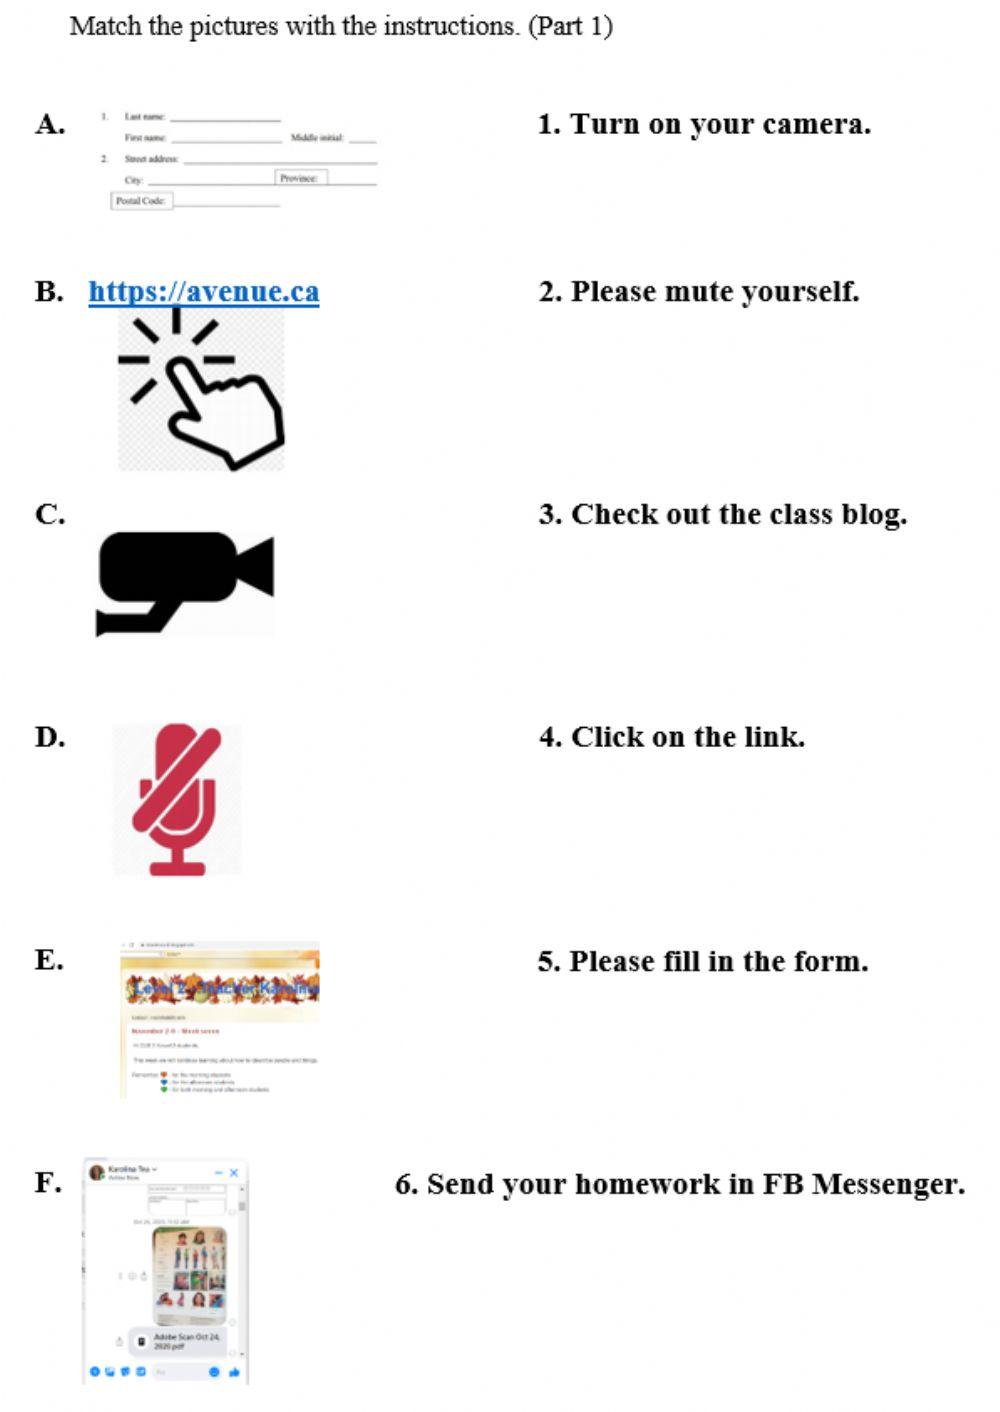 Classroom Instructions Online - Part 1